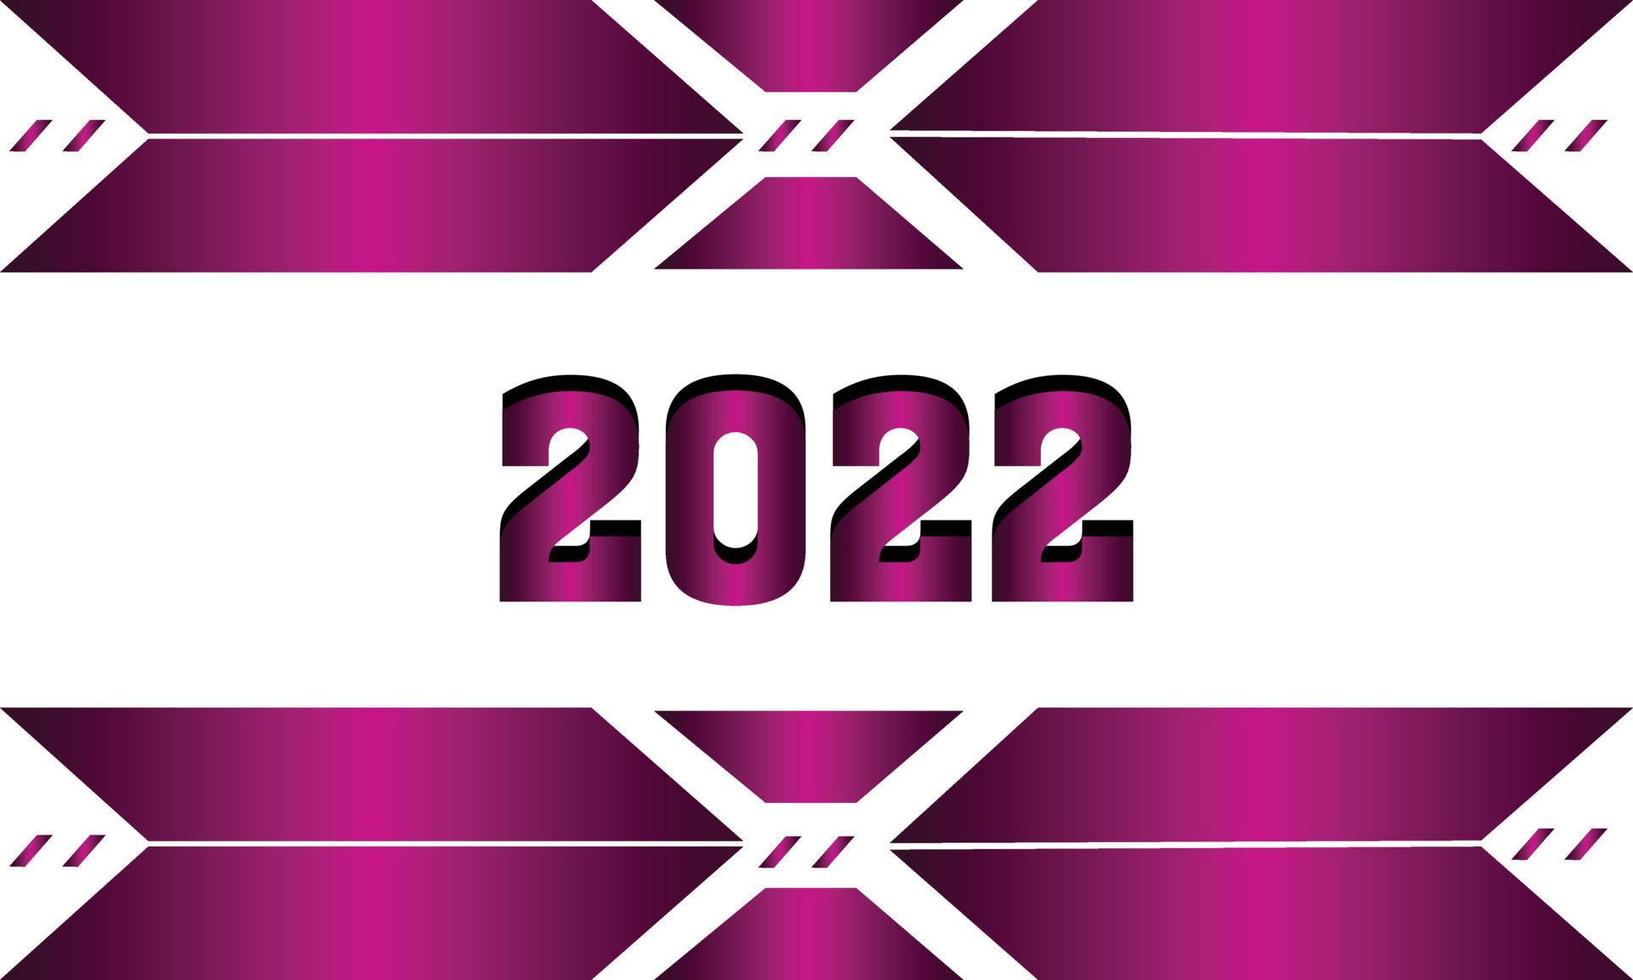 2022 background design vector template